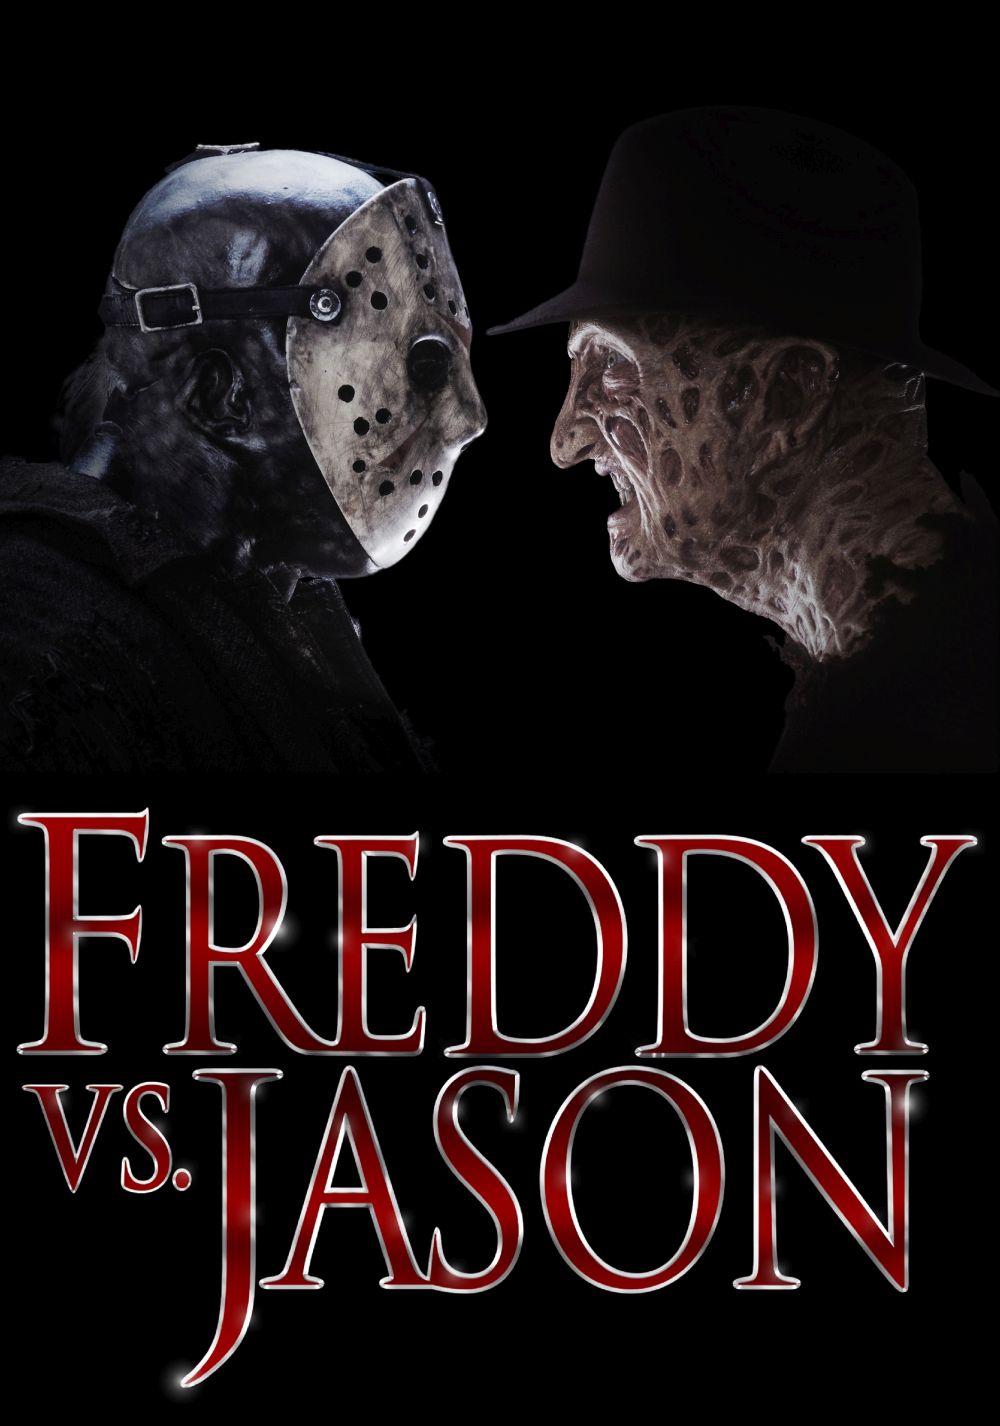 Freddy Vs Jason Poster Friday The 13th Photo